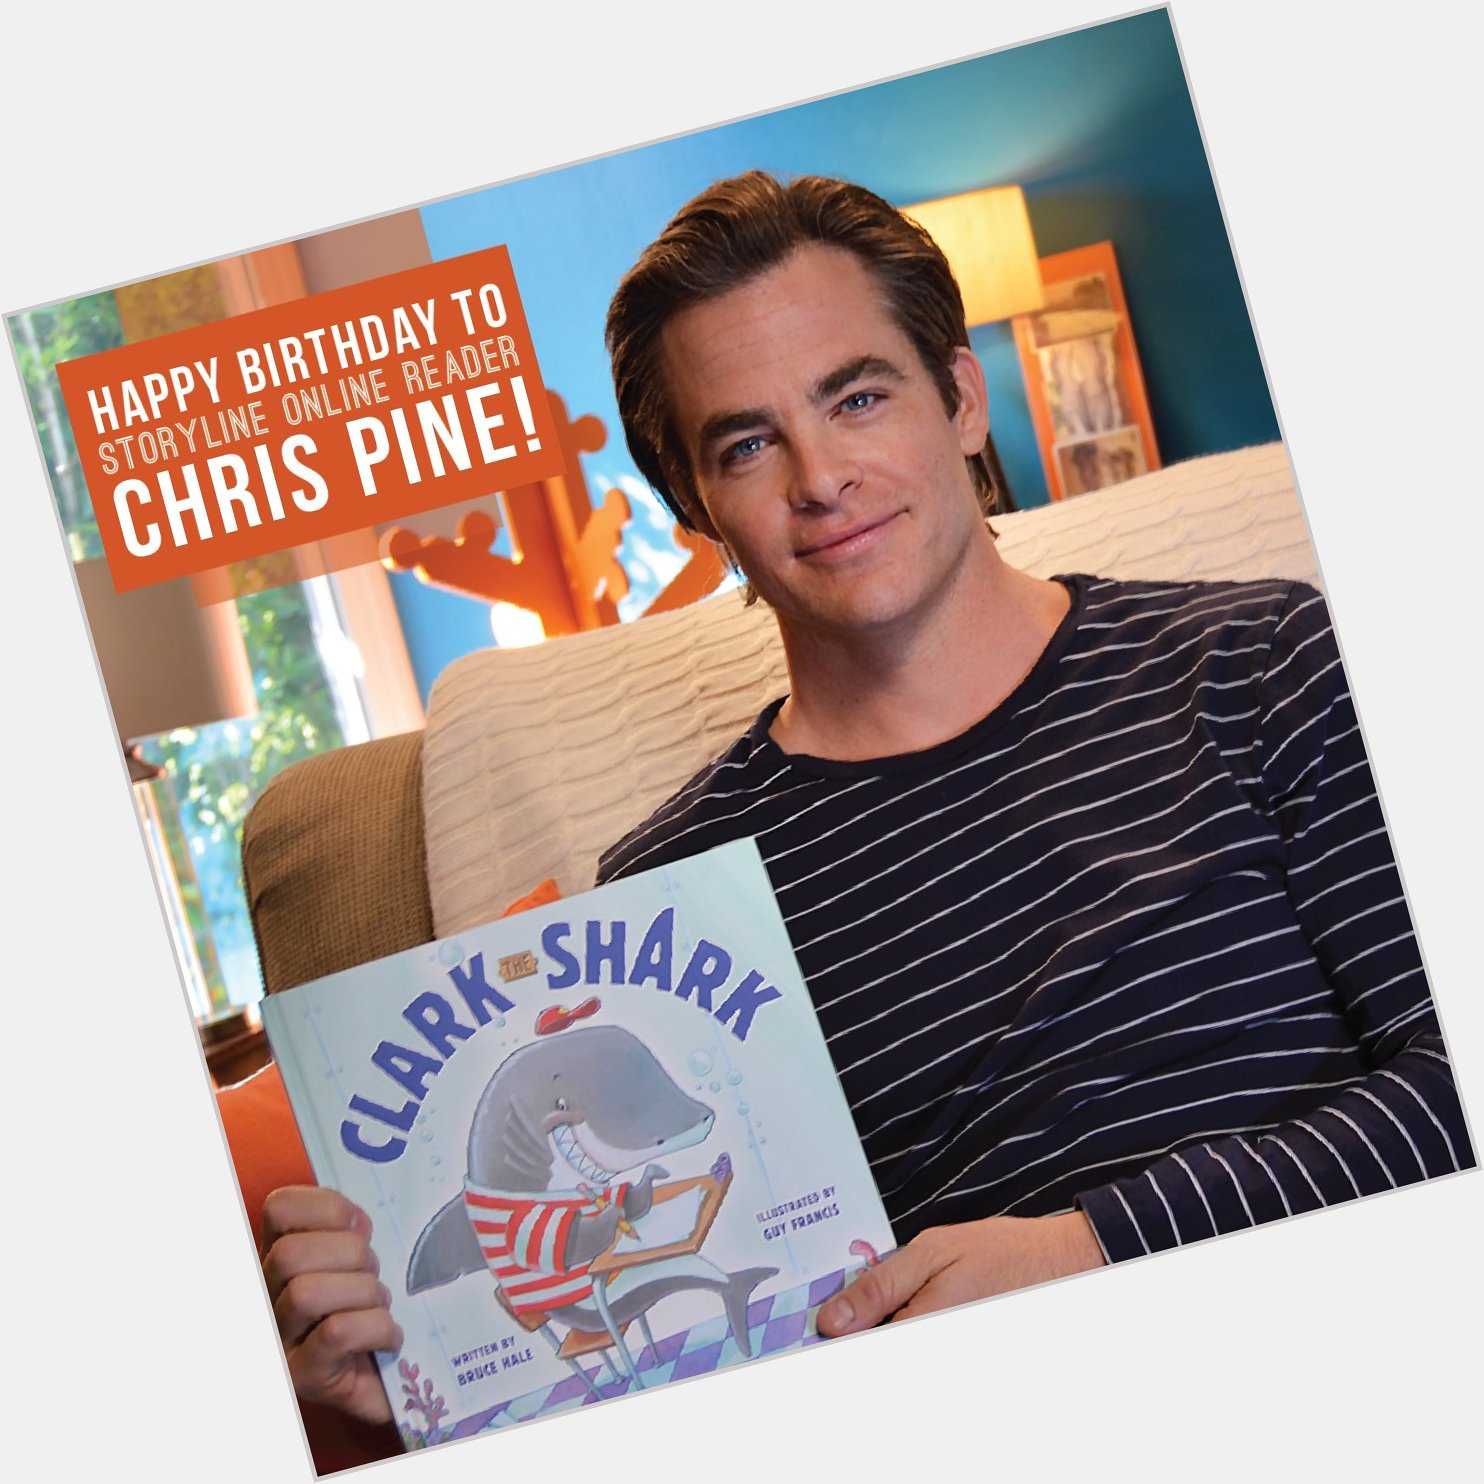 Happy Birthday to reader Chris Pine! 